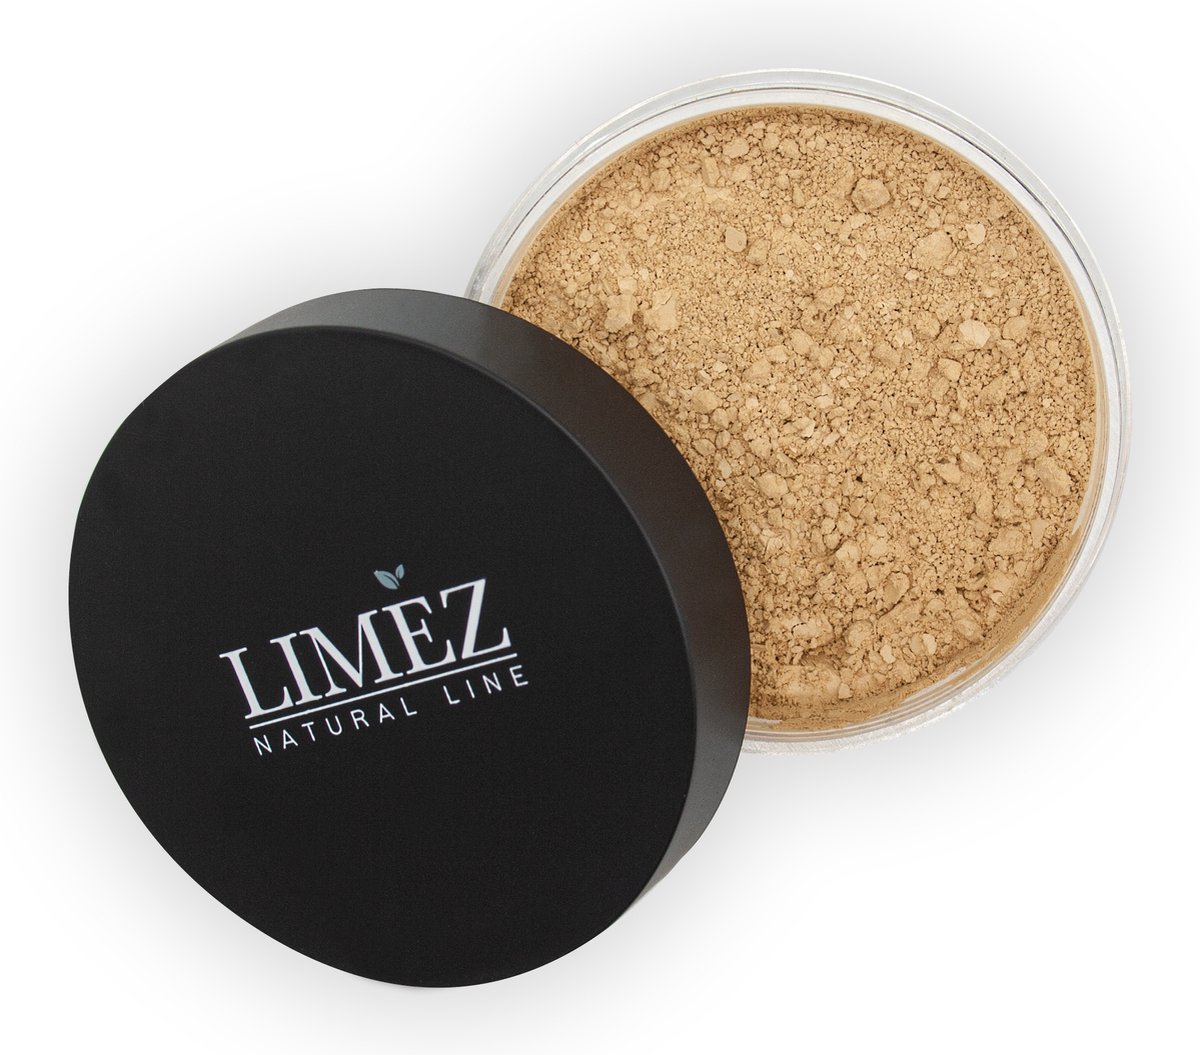 Limèz - Natural line - Foundation Limestone Mineral - Natuurlijke foundation - Vegan - Mineralen